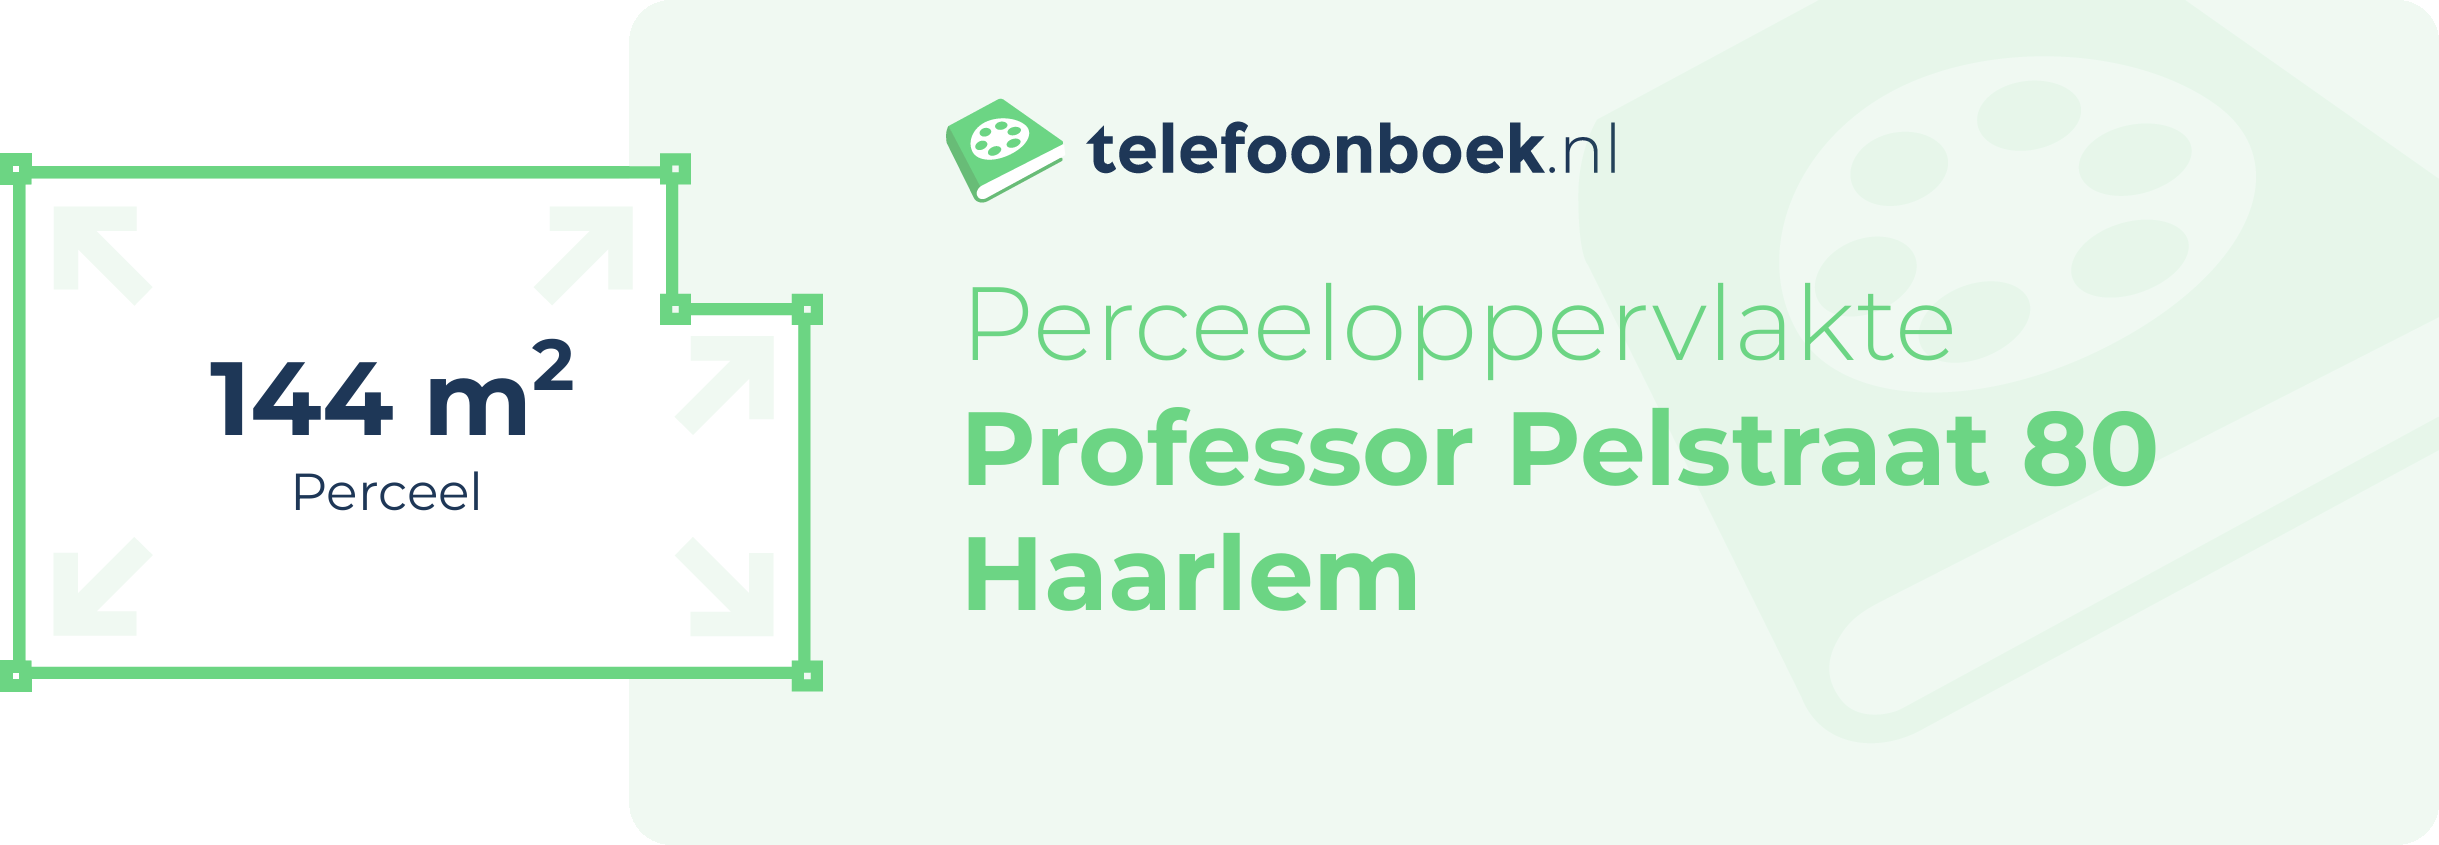 Perceeloppervlakte Professor Pelstraat 80 Haarlem